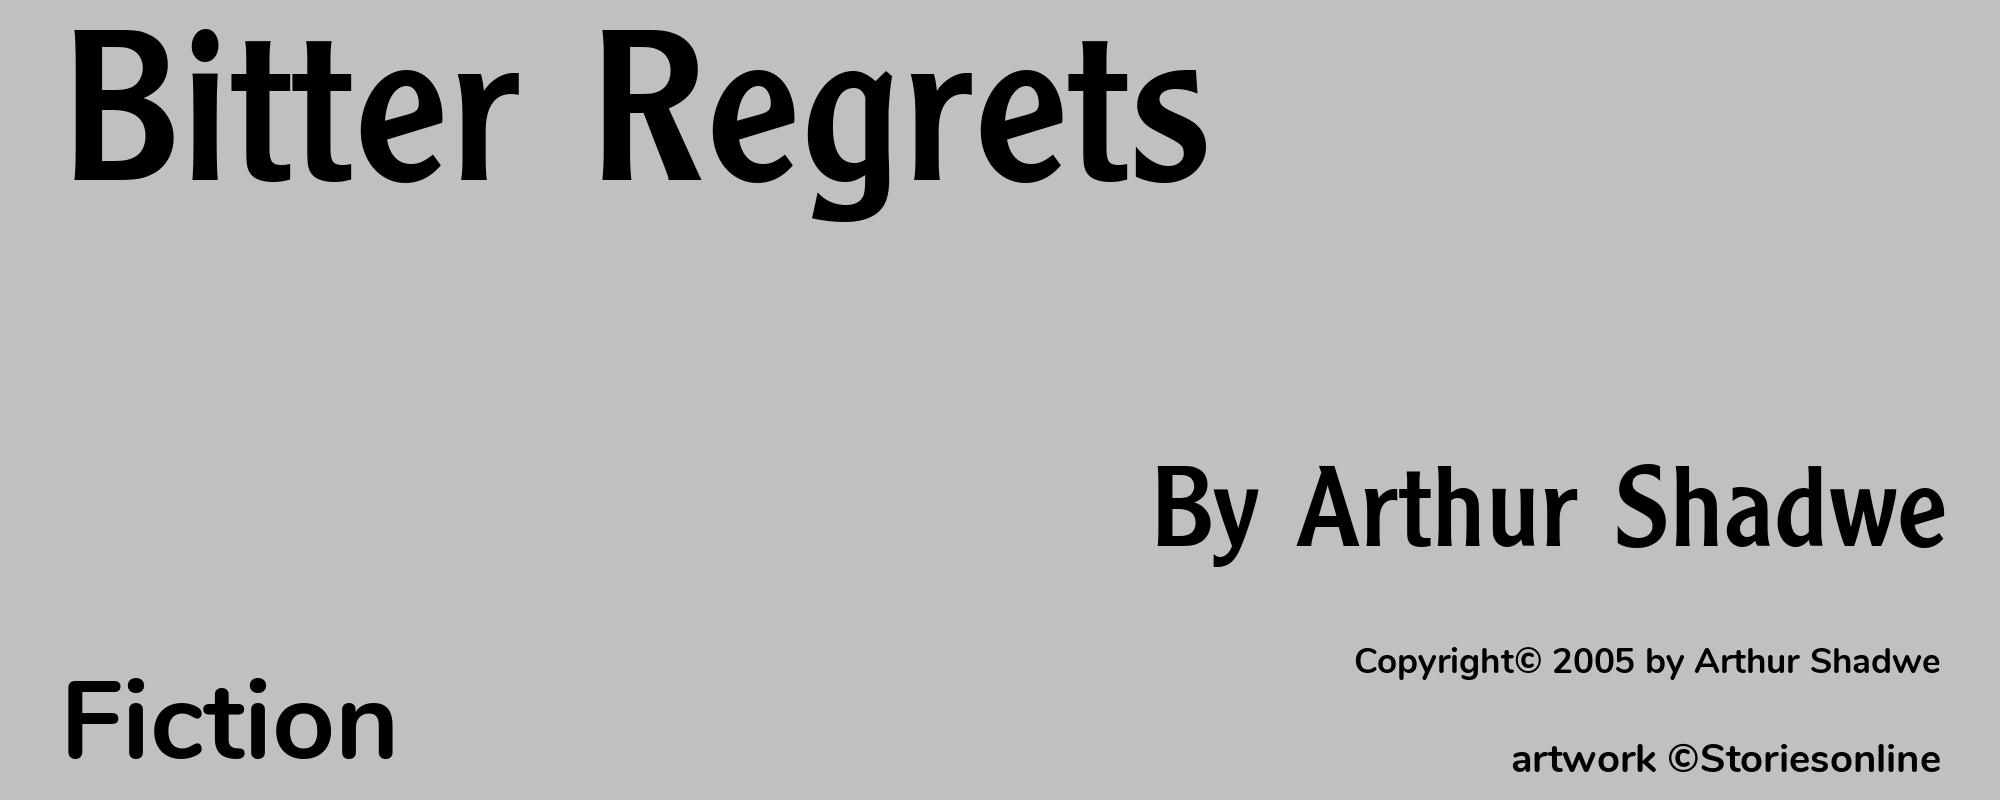 Bitter Regrets - Cover